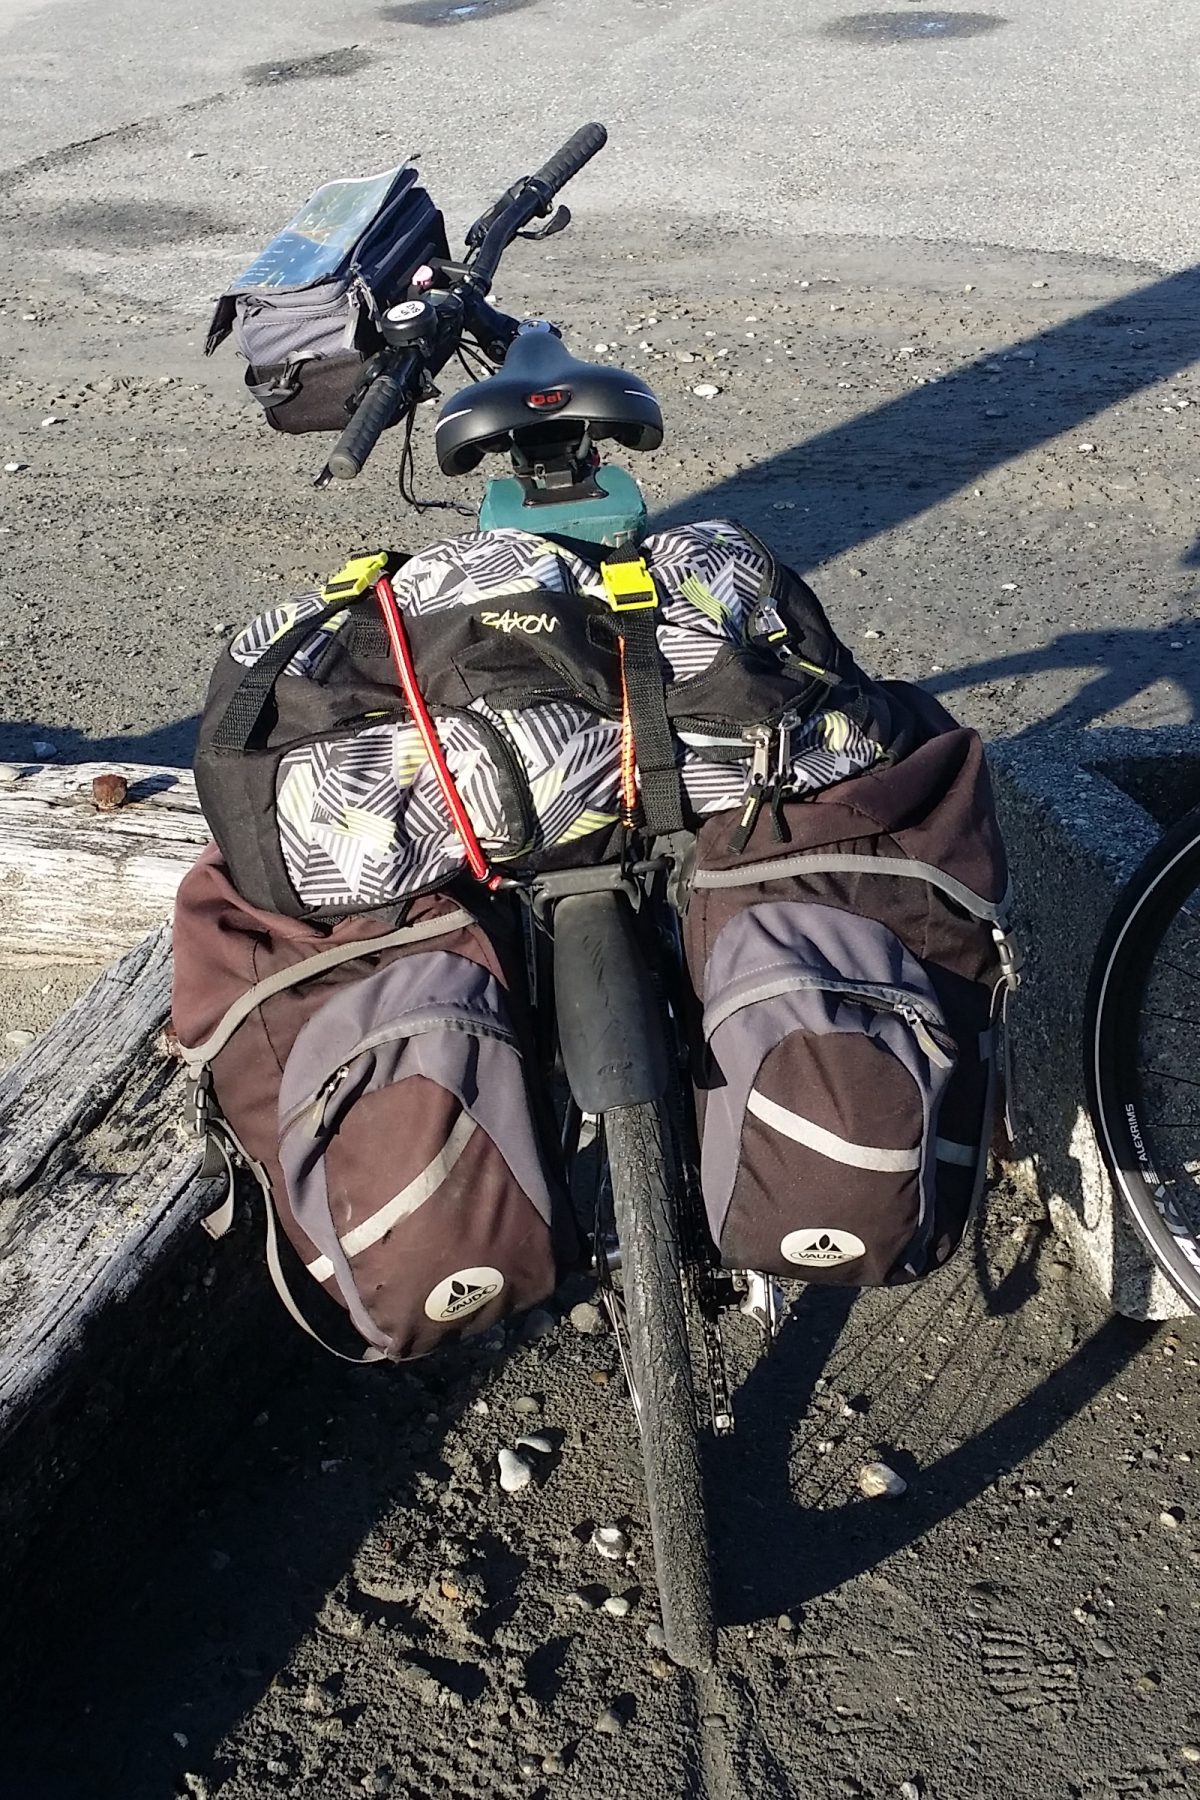 Carrying stuff by bike